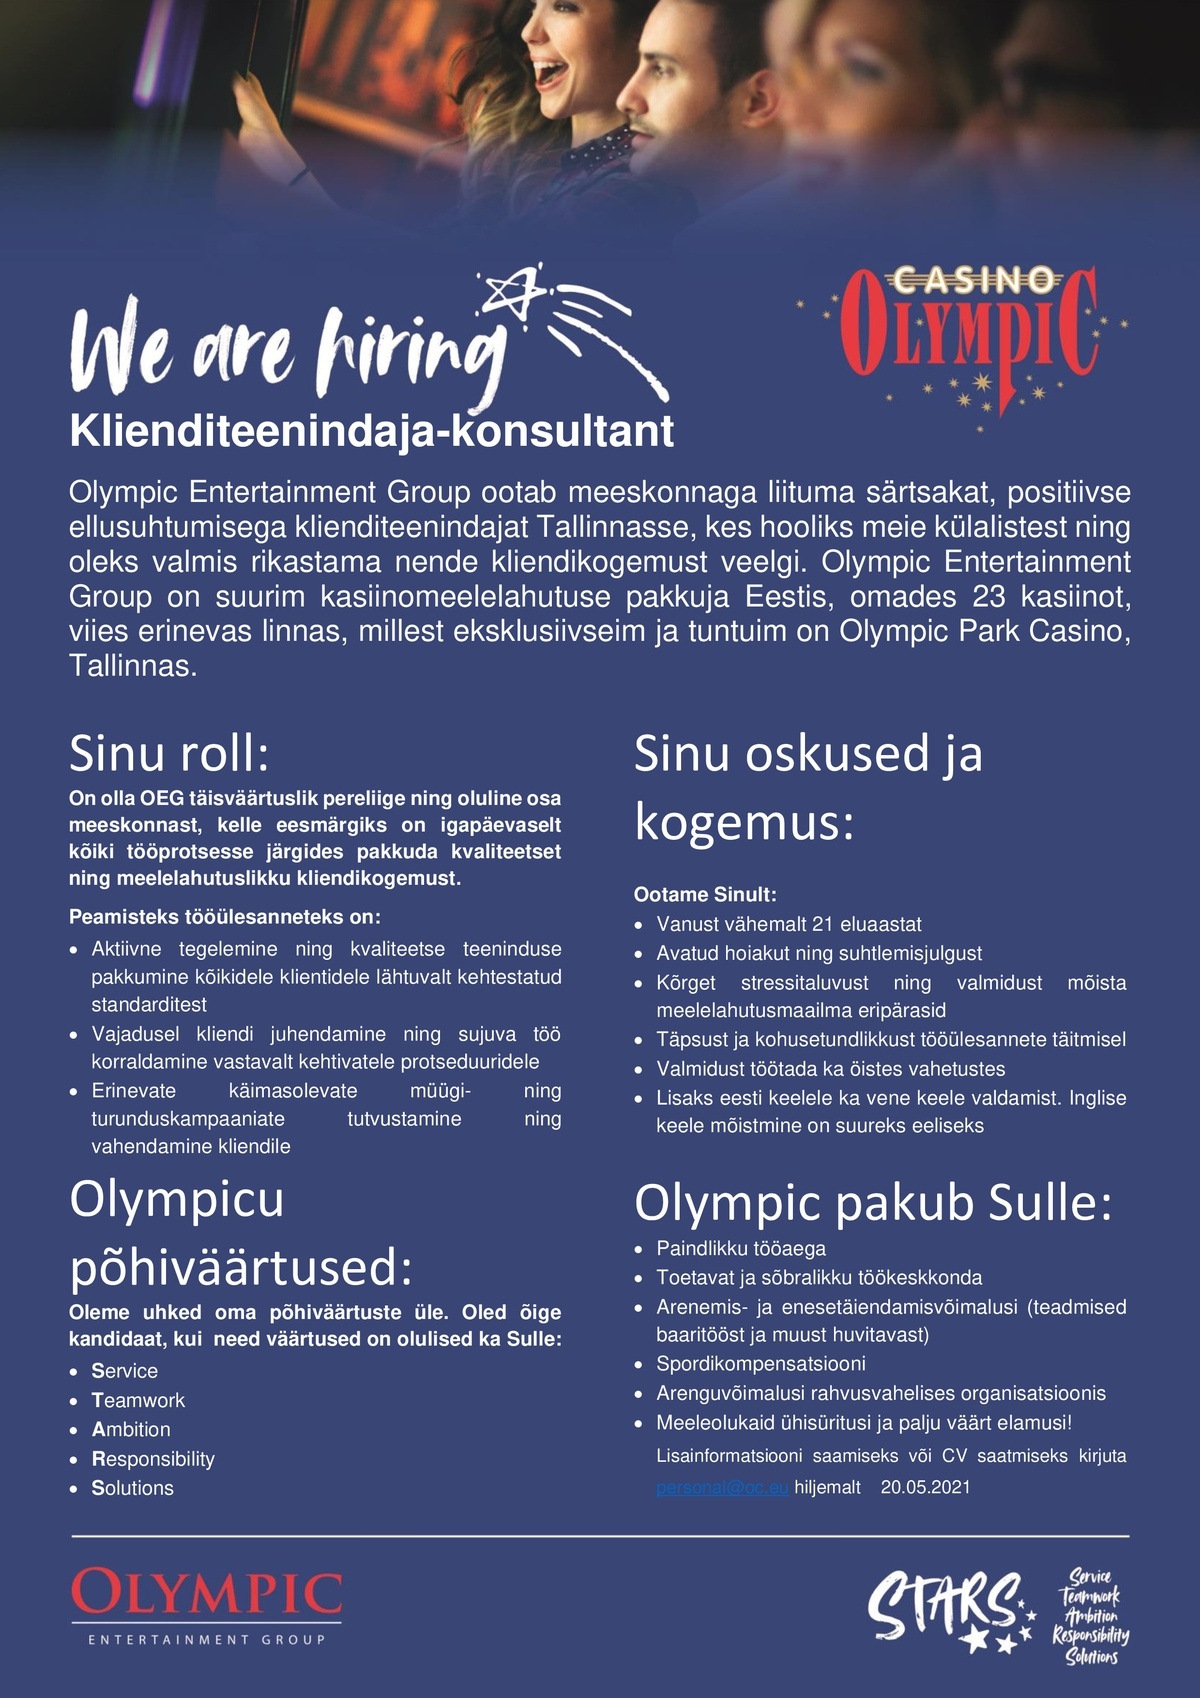 OLYMPIC ENTERTAINMENT GROUP AS Klienditeenindaja-konsultant Tallinnasse